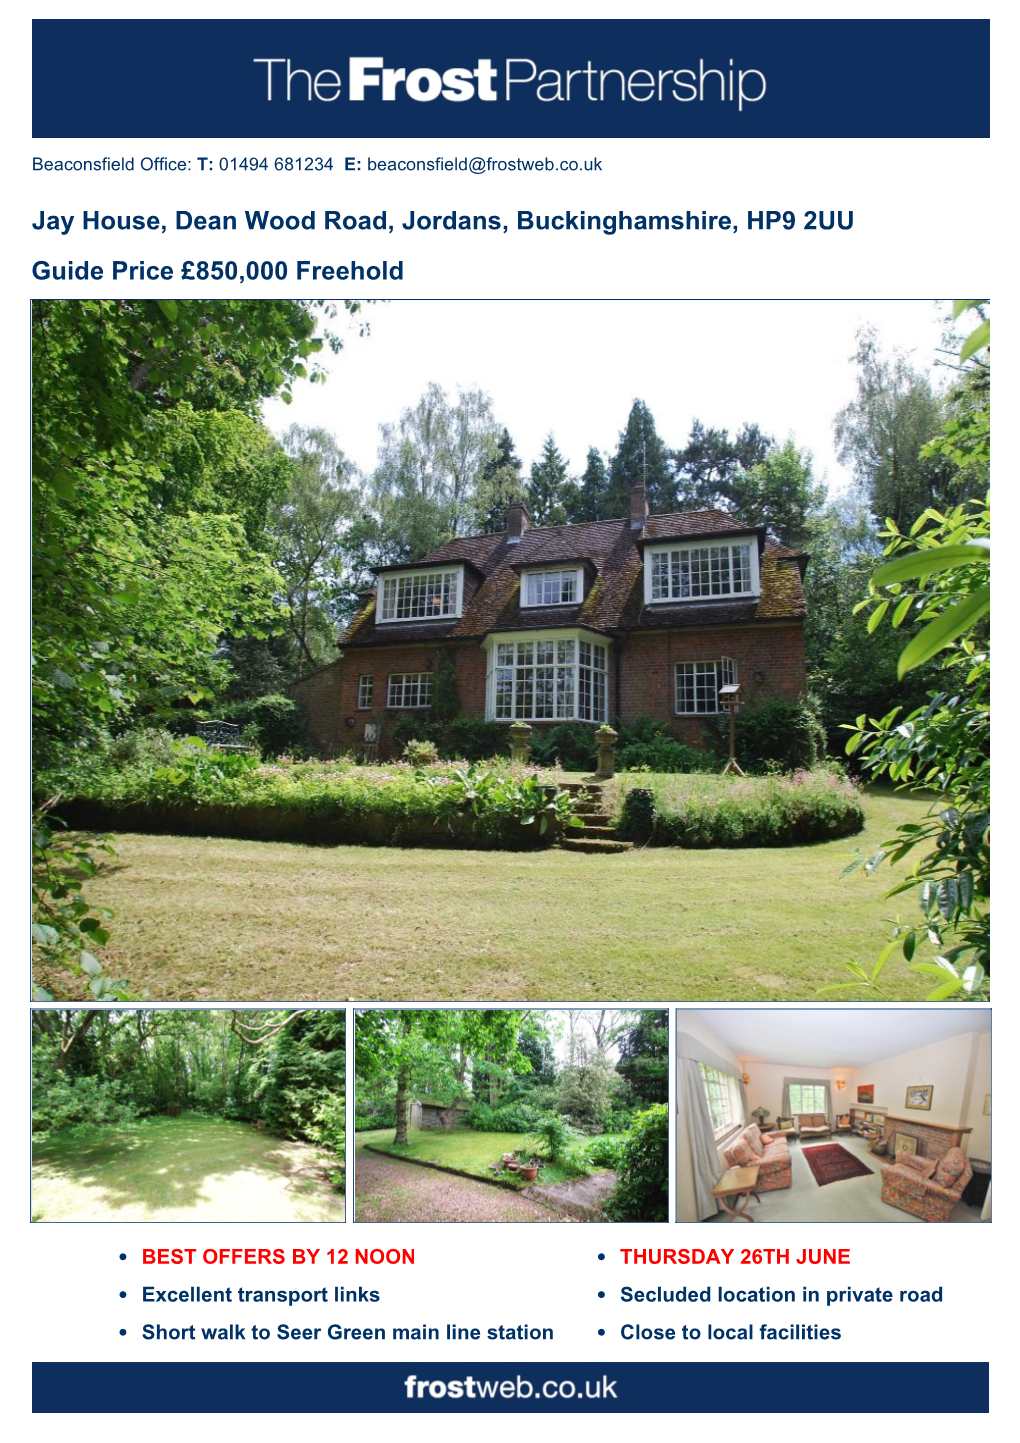 Jay House, Dean Wood Road, Jordans, Buckinghamshire, HP9 2UU Guide Price £850,000 Freehold